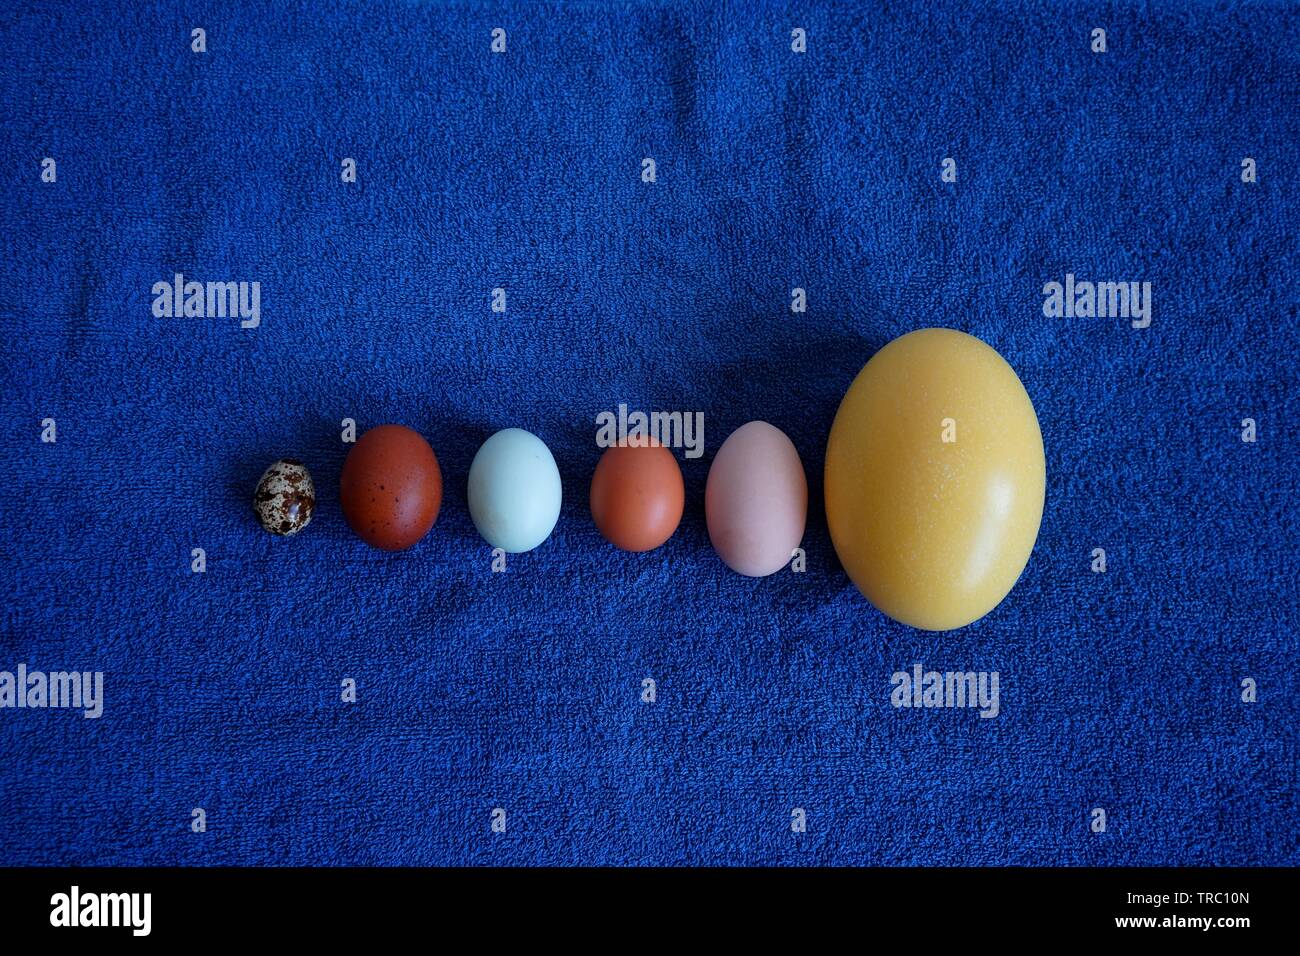 Egg comparison of nandu, hen, farmer and grocery egg, araucana, naran and quail egg. Stock Photo